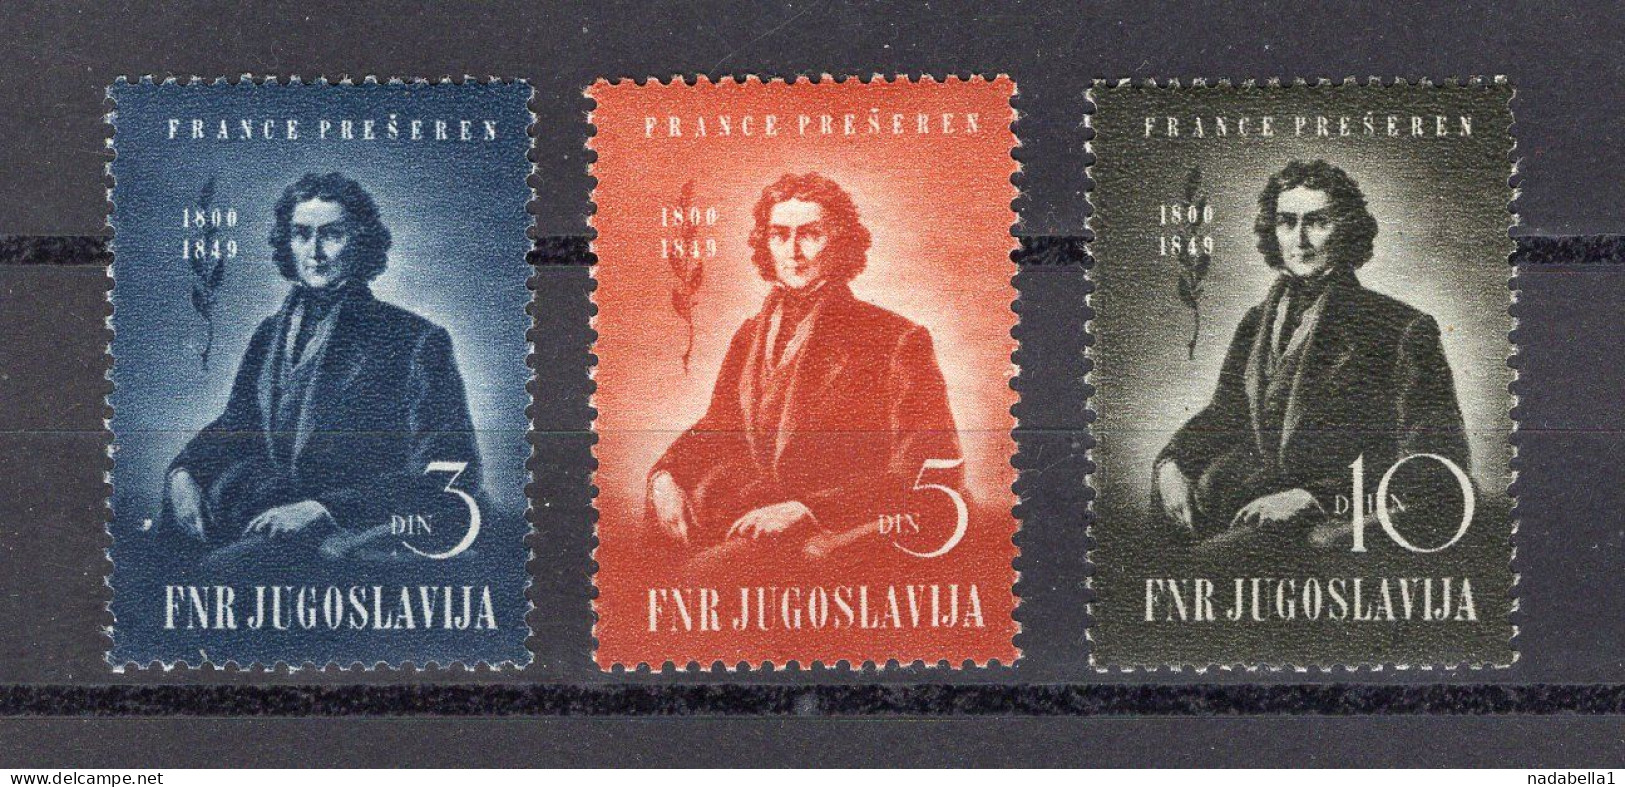 1949. YUGOSLAVIA,FRANCE PRESEREN 1800-1949,SET OF 3 STAMPS,MNH - Neufs